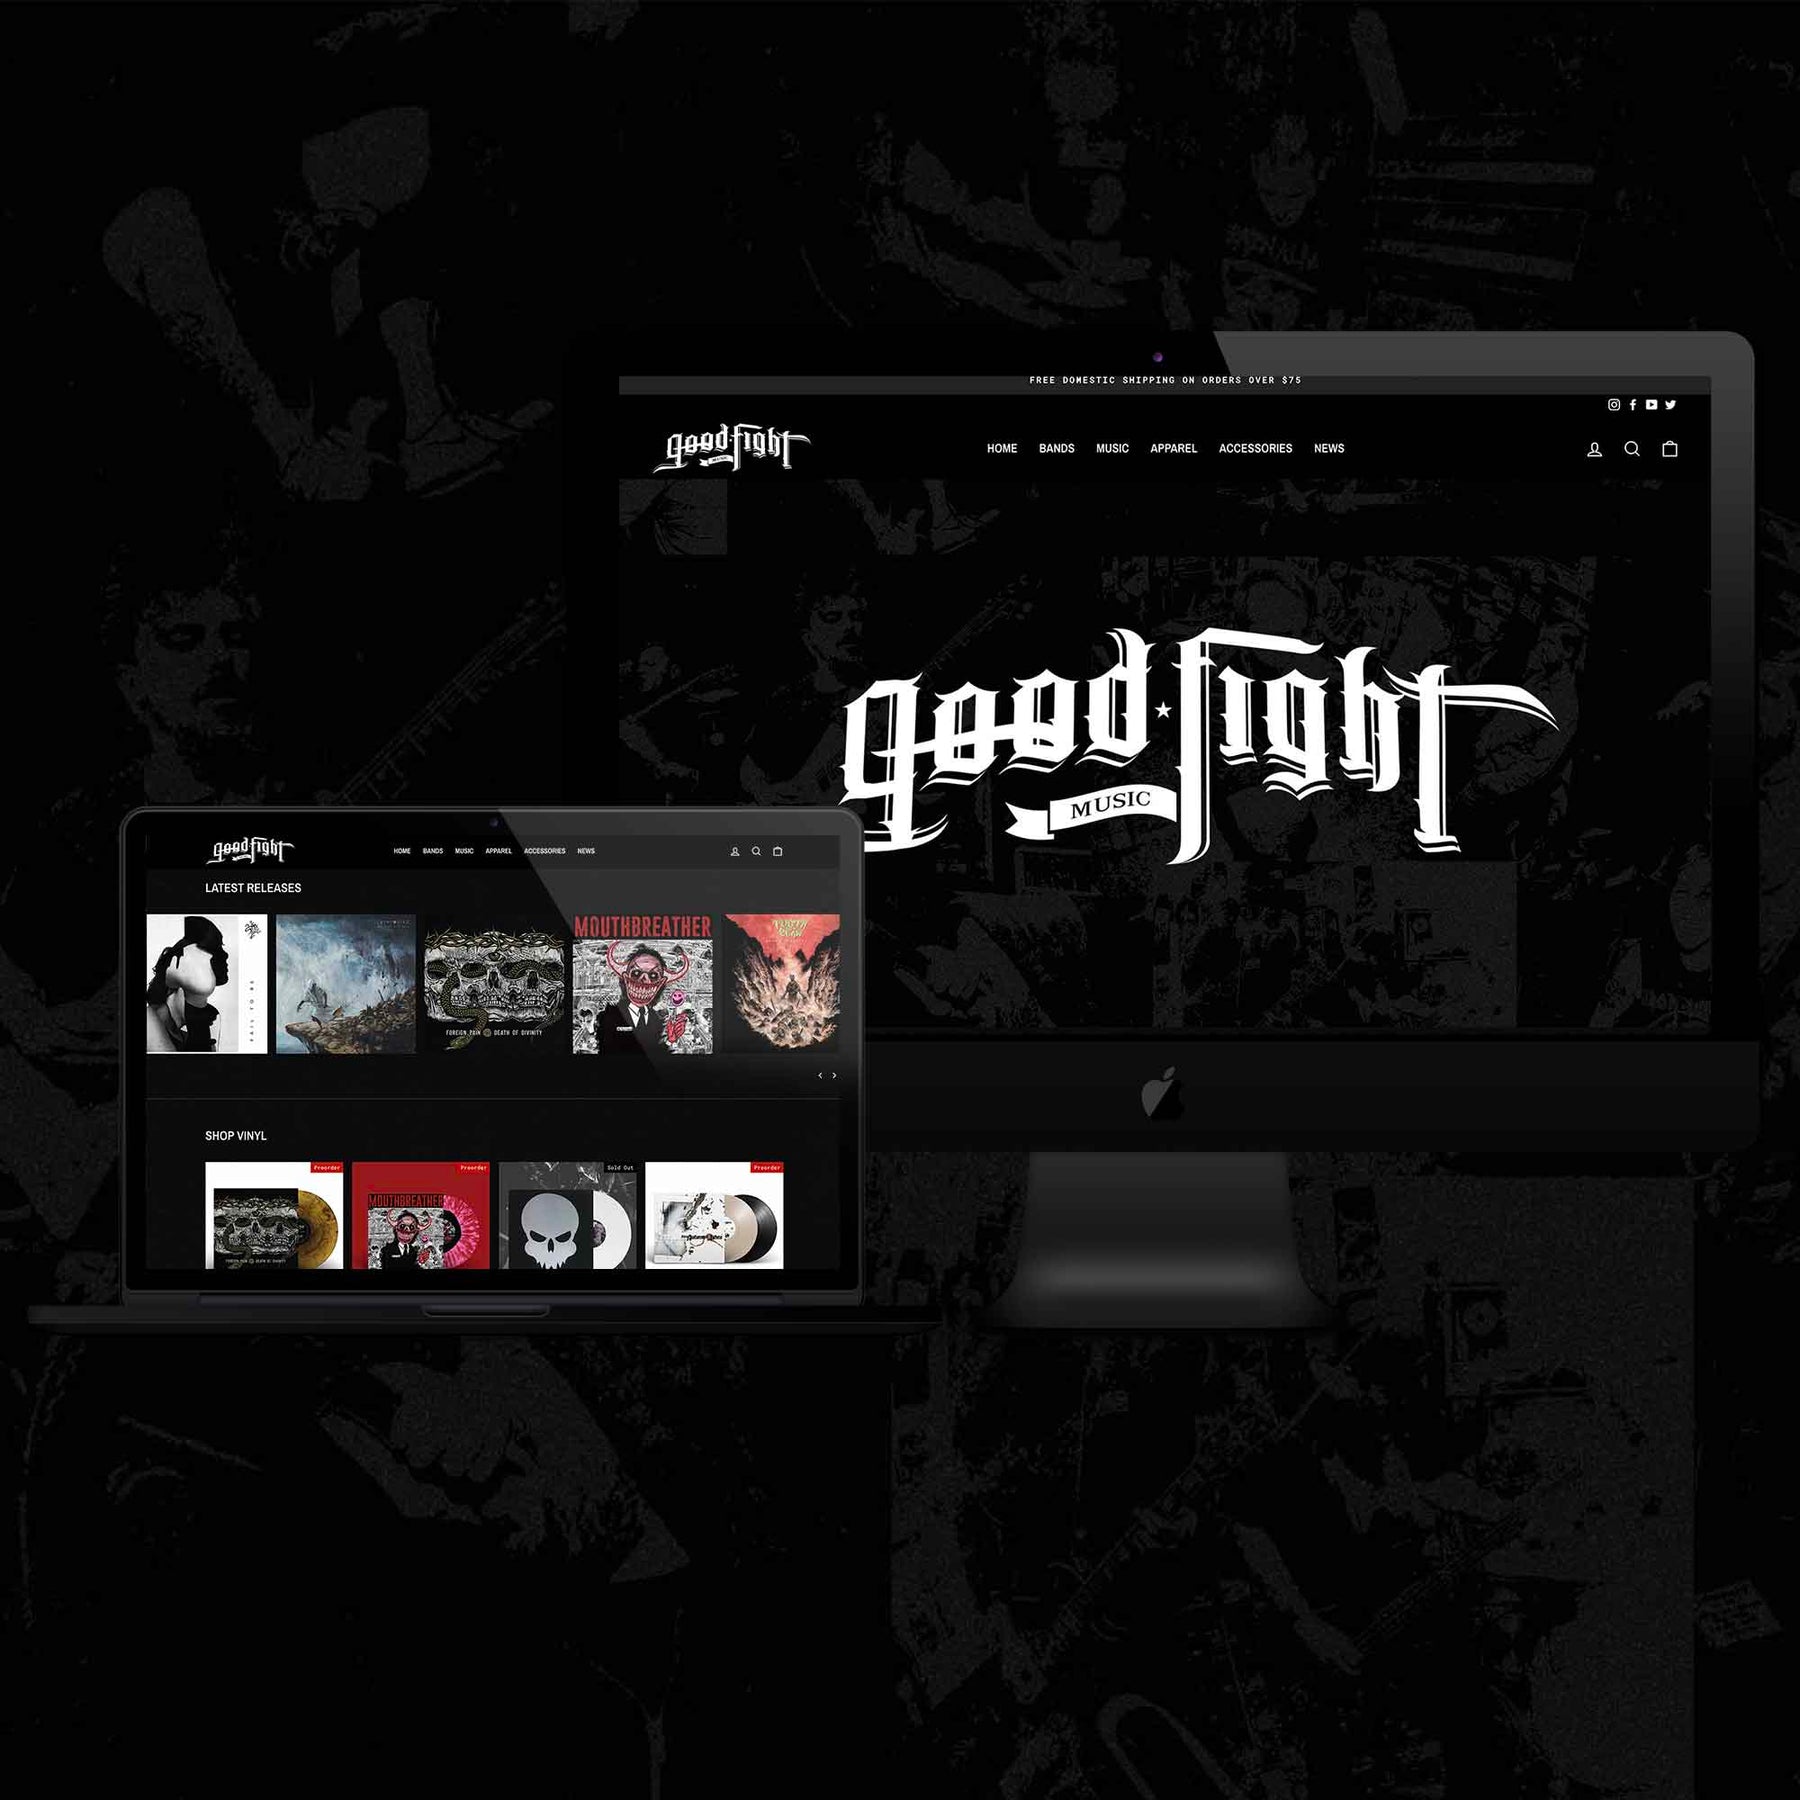 Good Fight Music - New Website Mockup on black Apple iMac and black Apple MacBook Pro